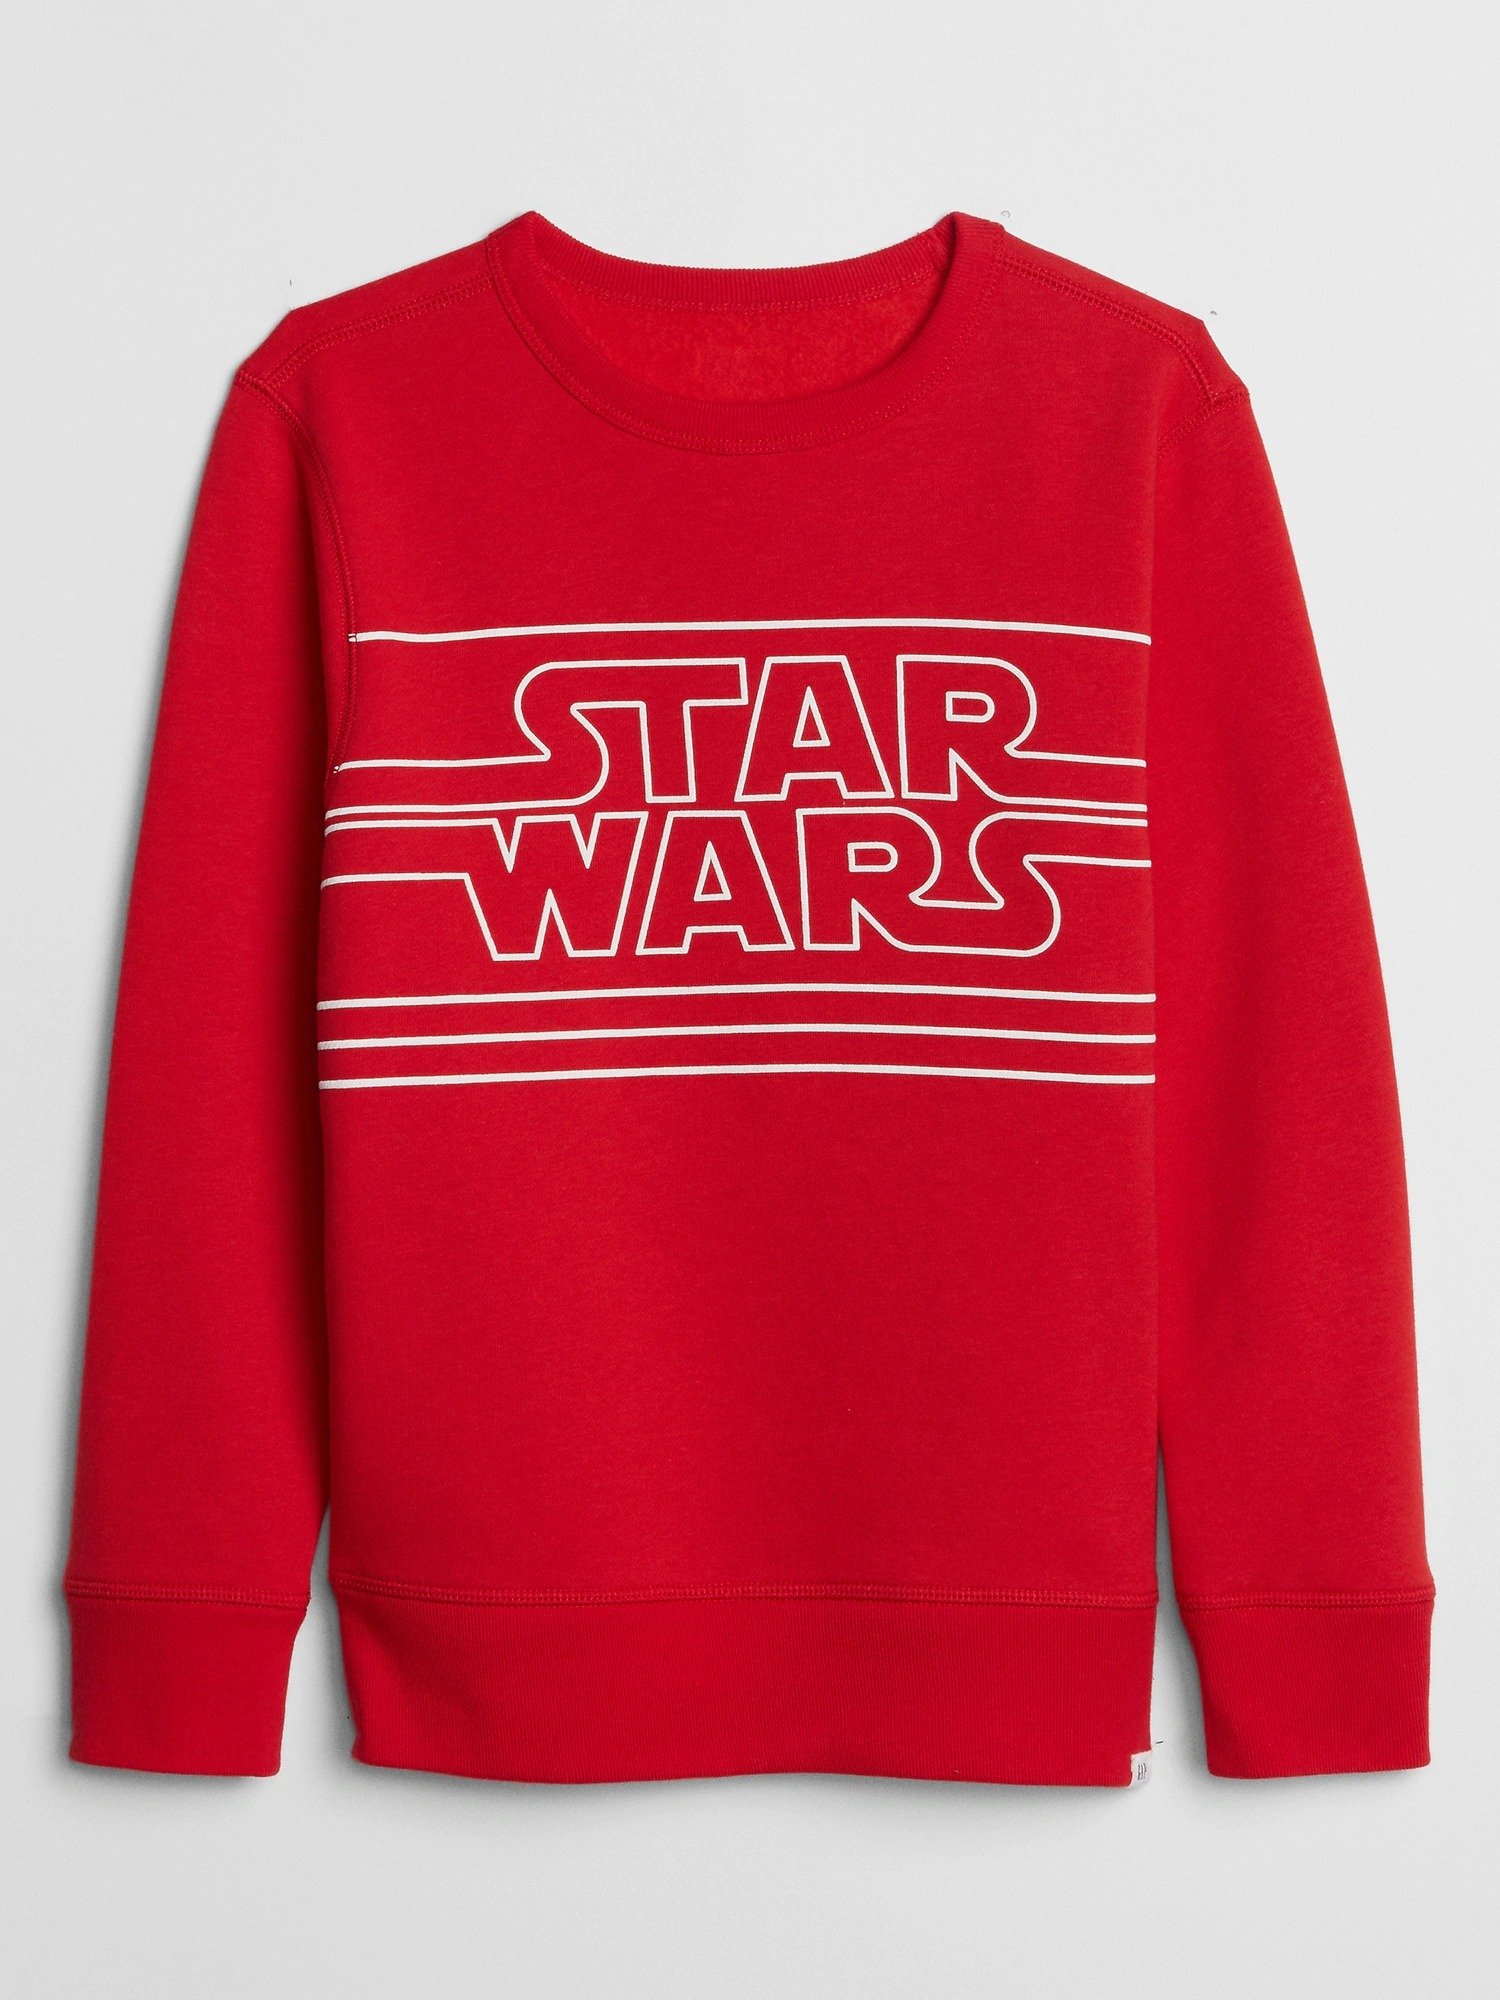 Star Wars™ Sweatshirt product image